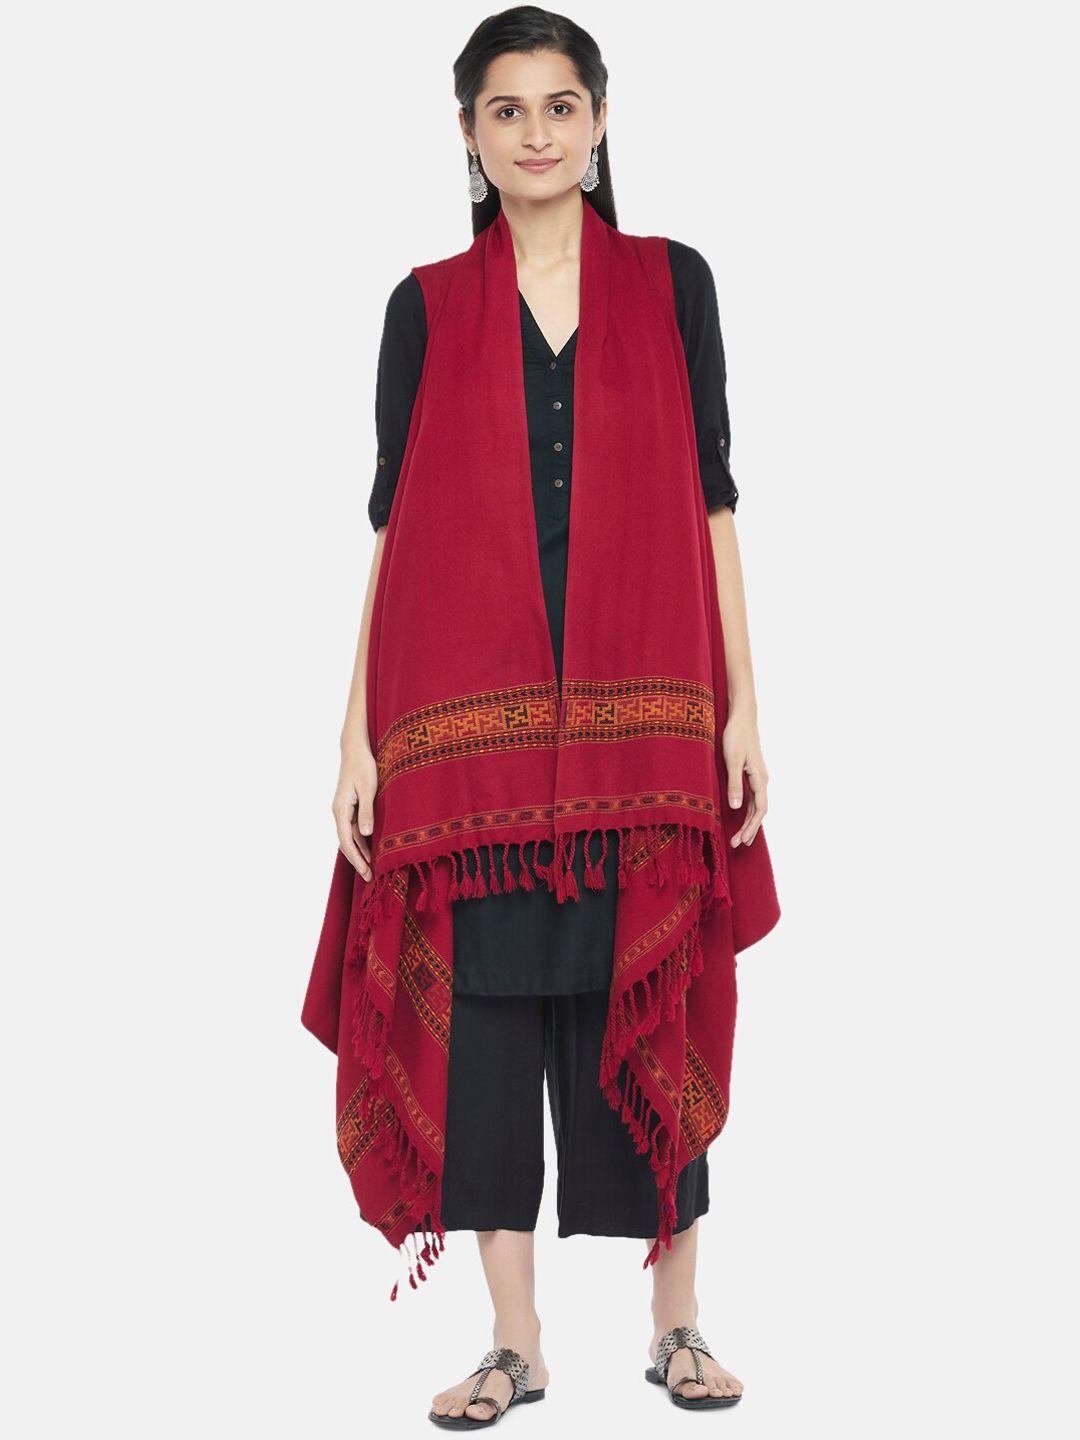 rangmanch by pantaloons women maroon acrylic longline ethnic open front jacket